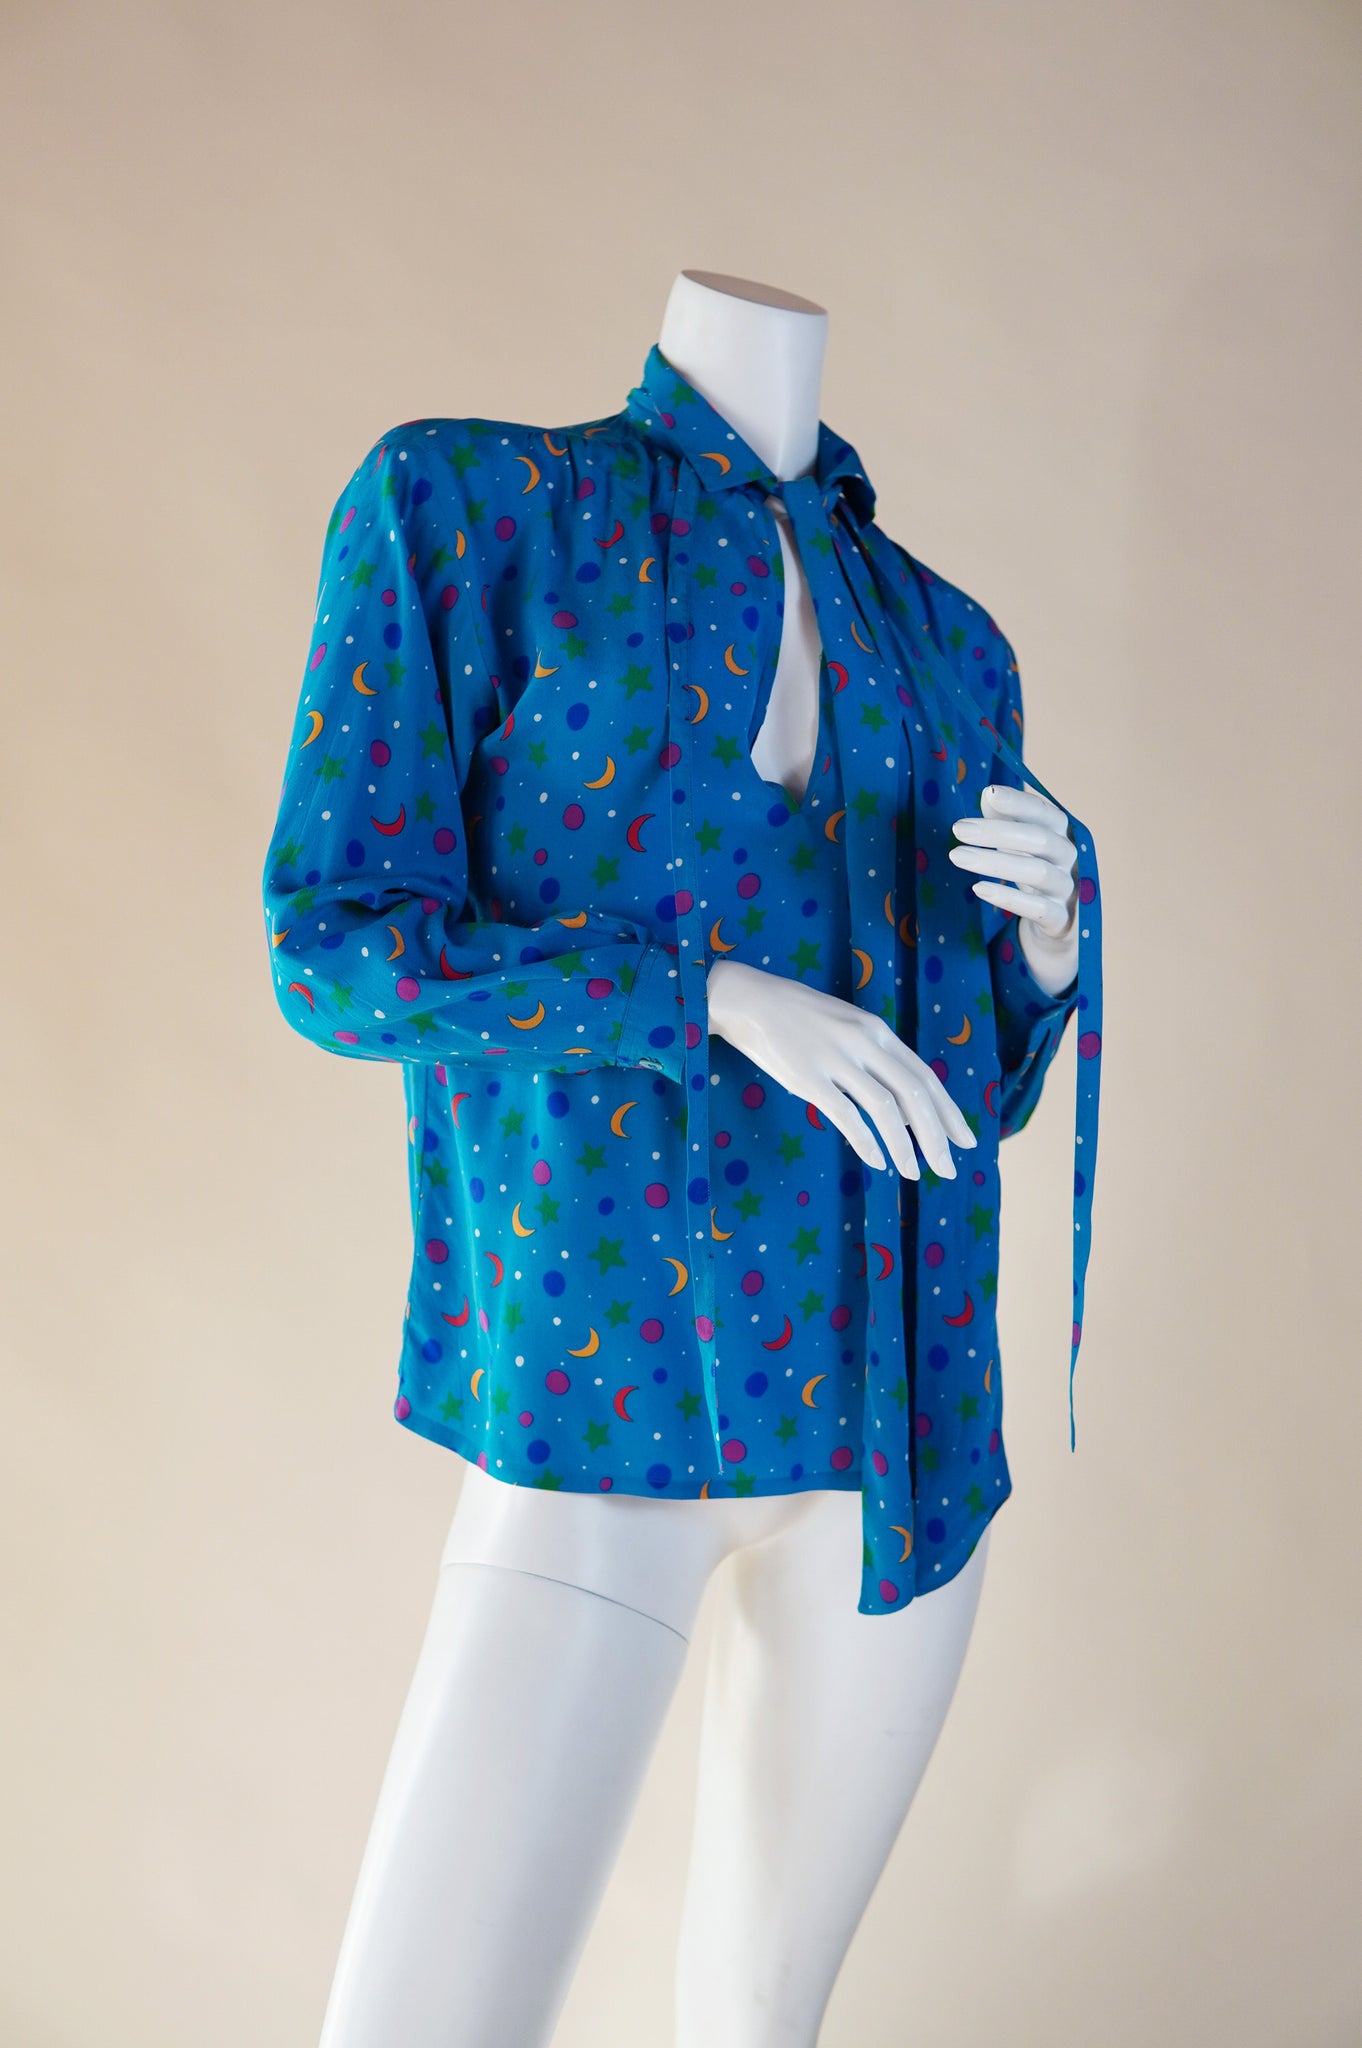 S/S 1979 Yves Saint Laurent Rive Gauche sun and moon collection blouse - S/M